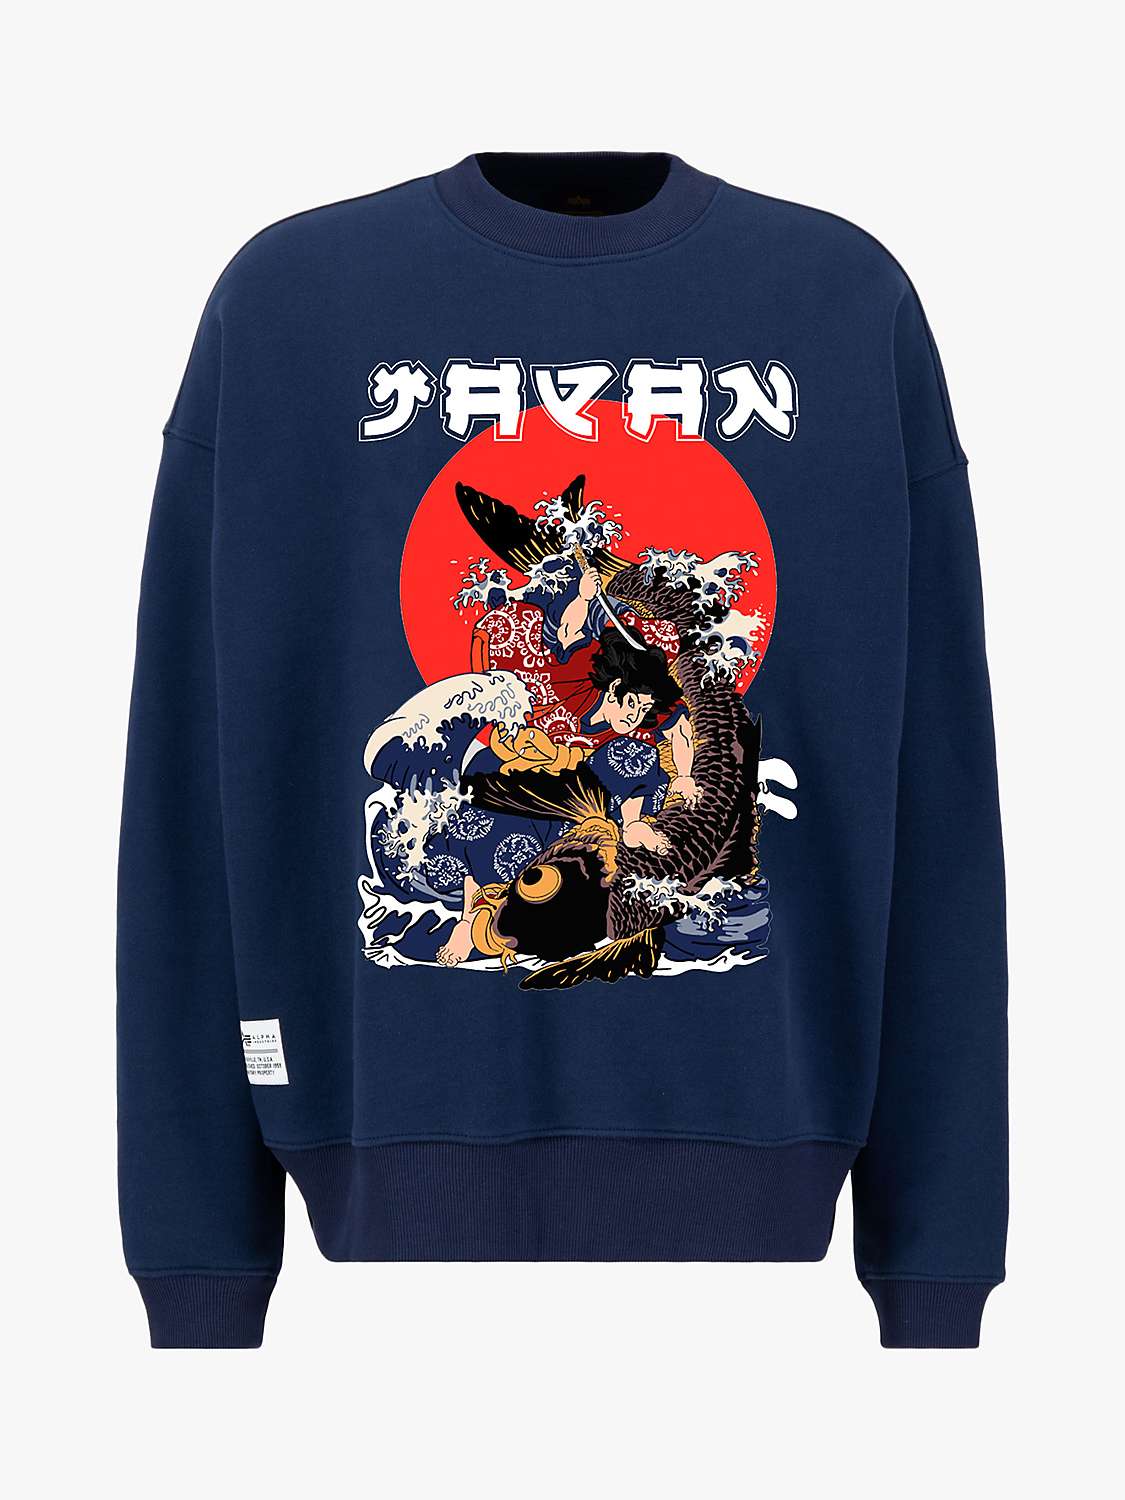 Buy Alpha Industries Japan Warrior Sweatshirt Online at johnlewis.com